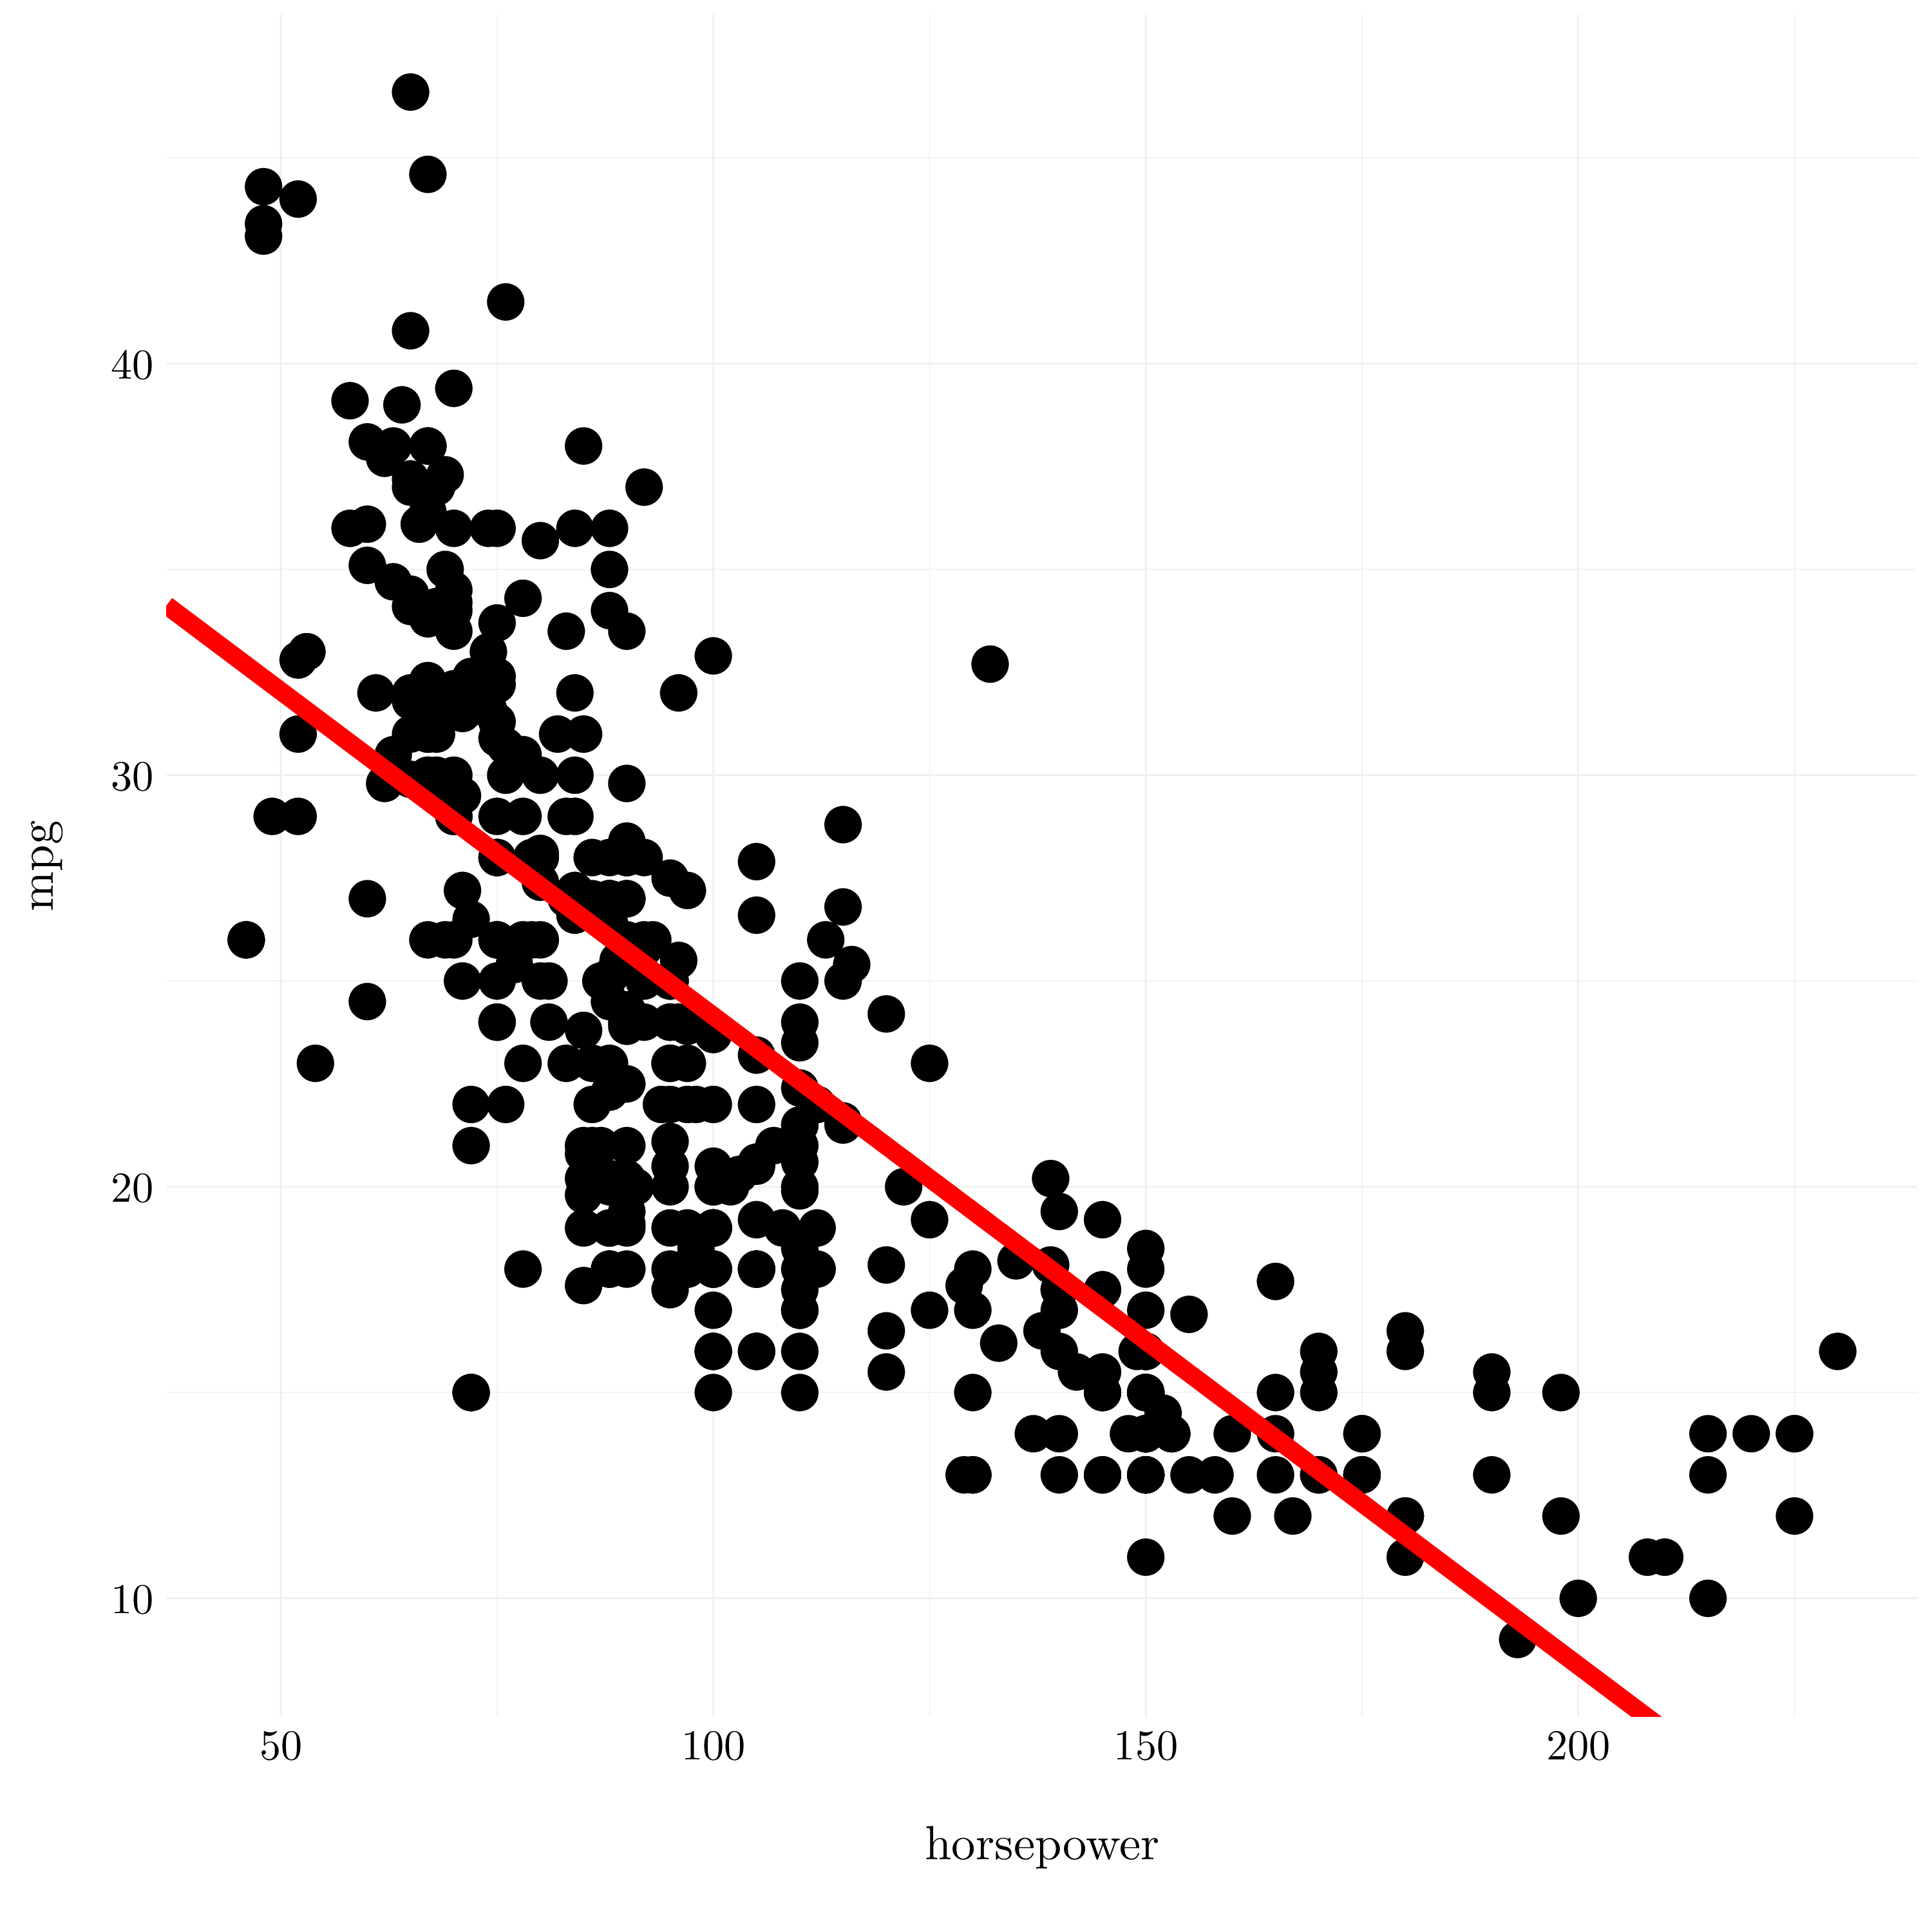 Least square regression plot for the *auto* dataset.